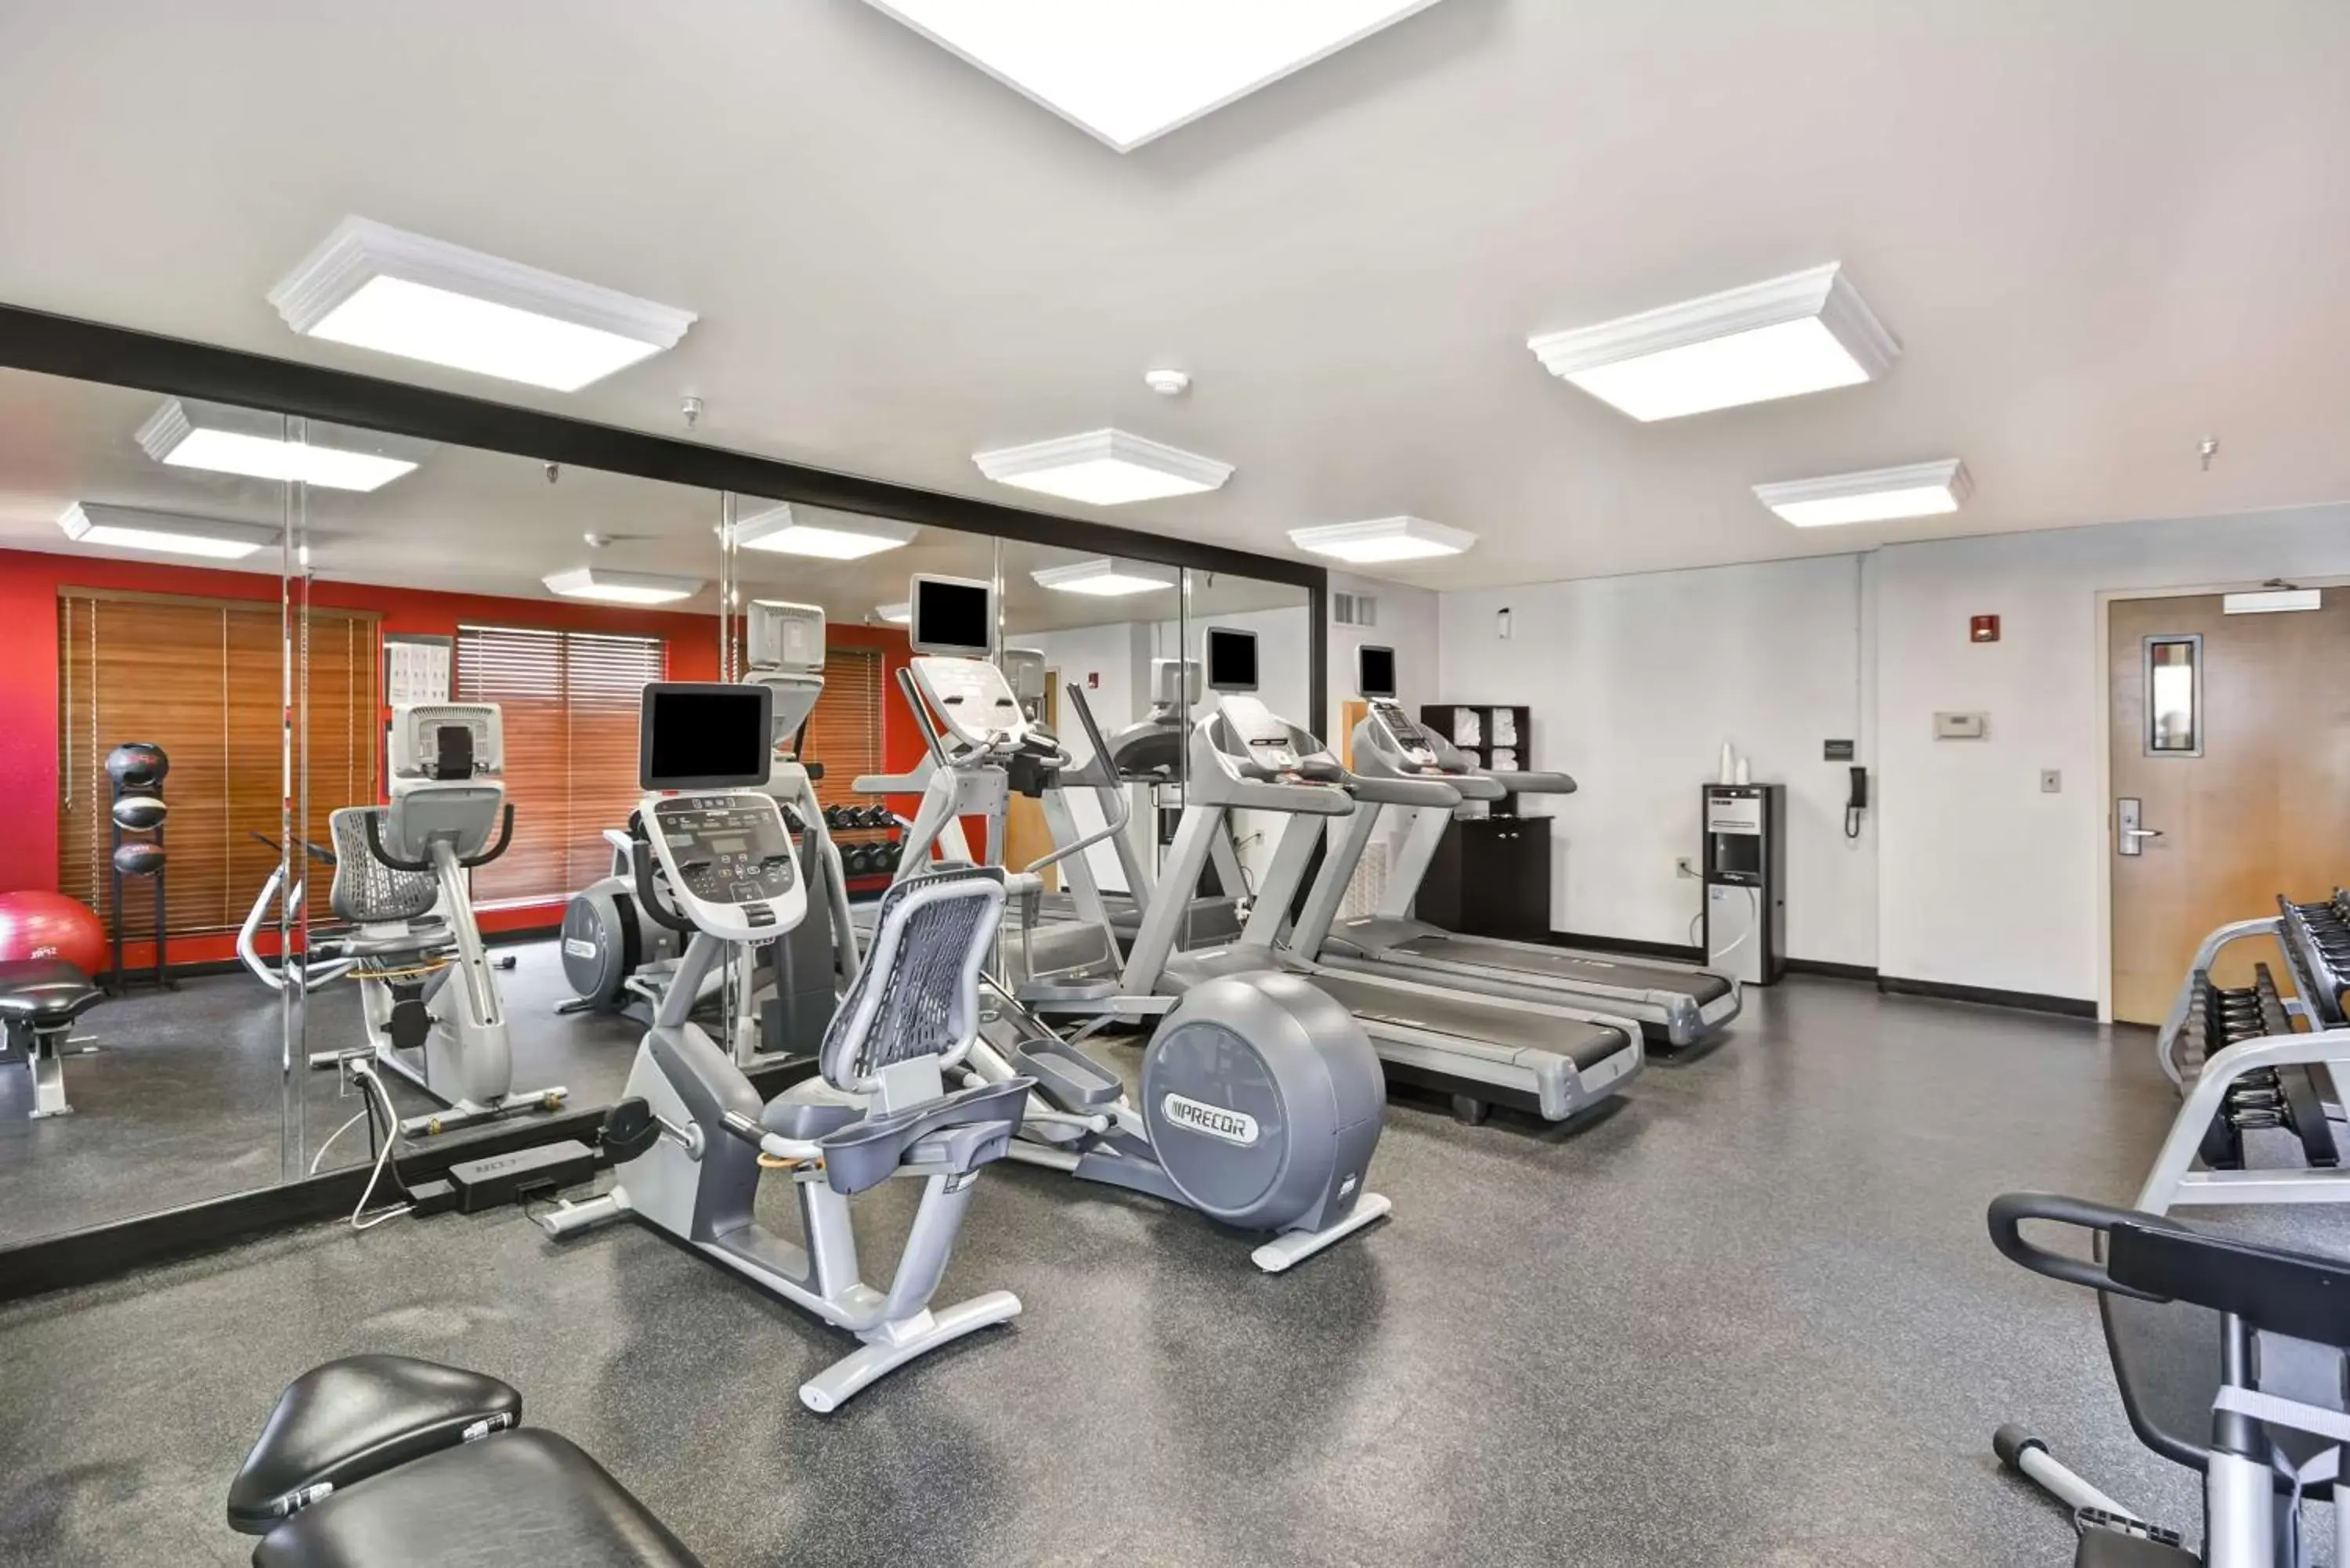 Fitness centre/facilities, Fitness Center/Facilities in Hilton Garden Inn Austin Round Rock